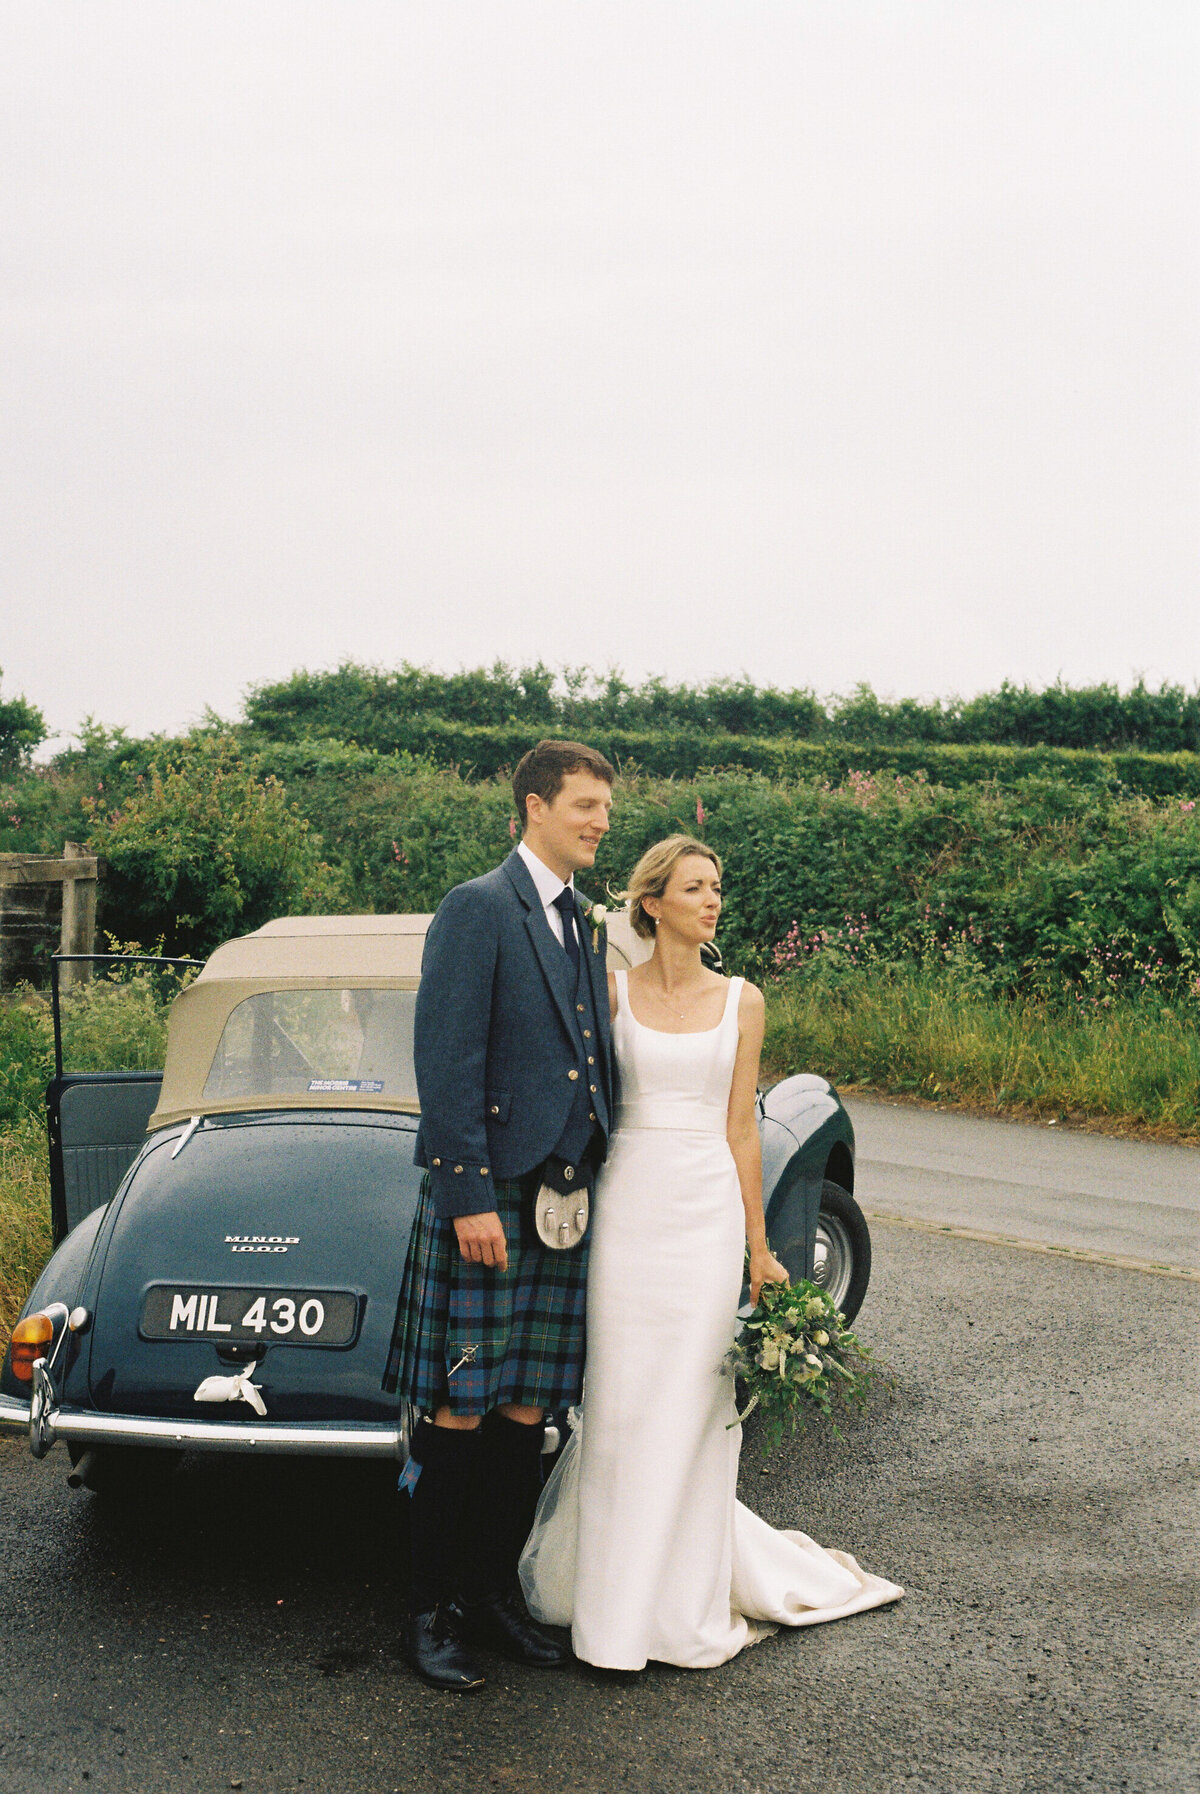 35mm couple portraits at Devon marquee wedding